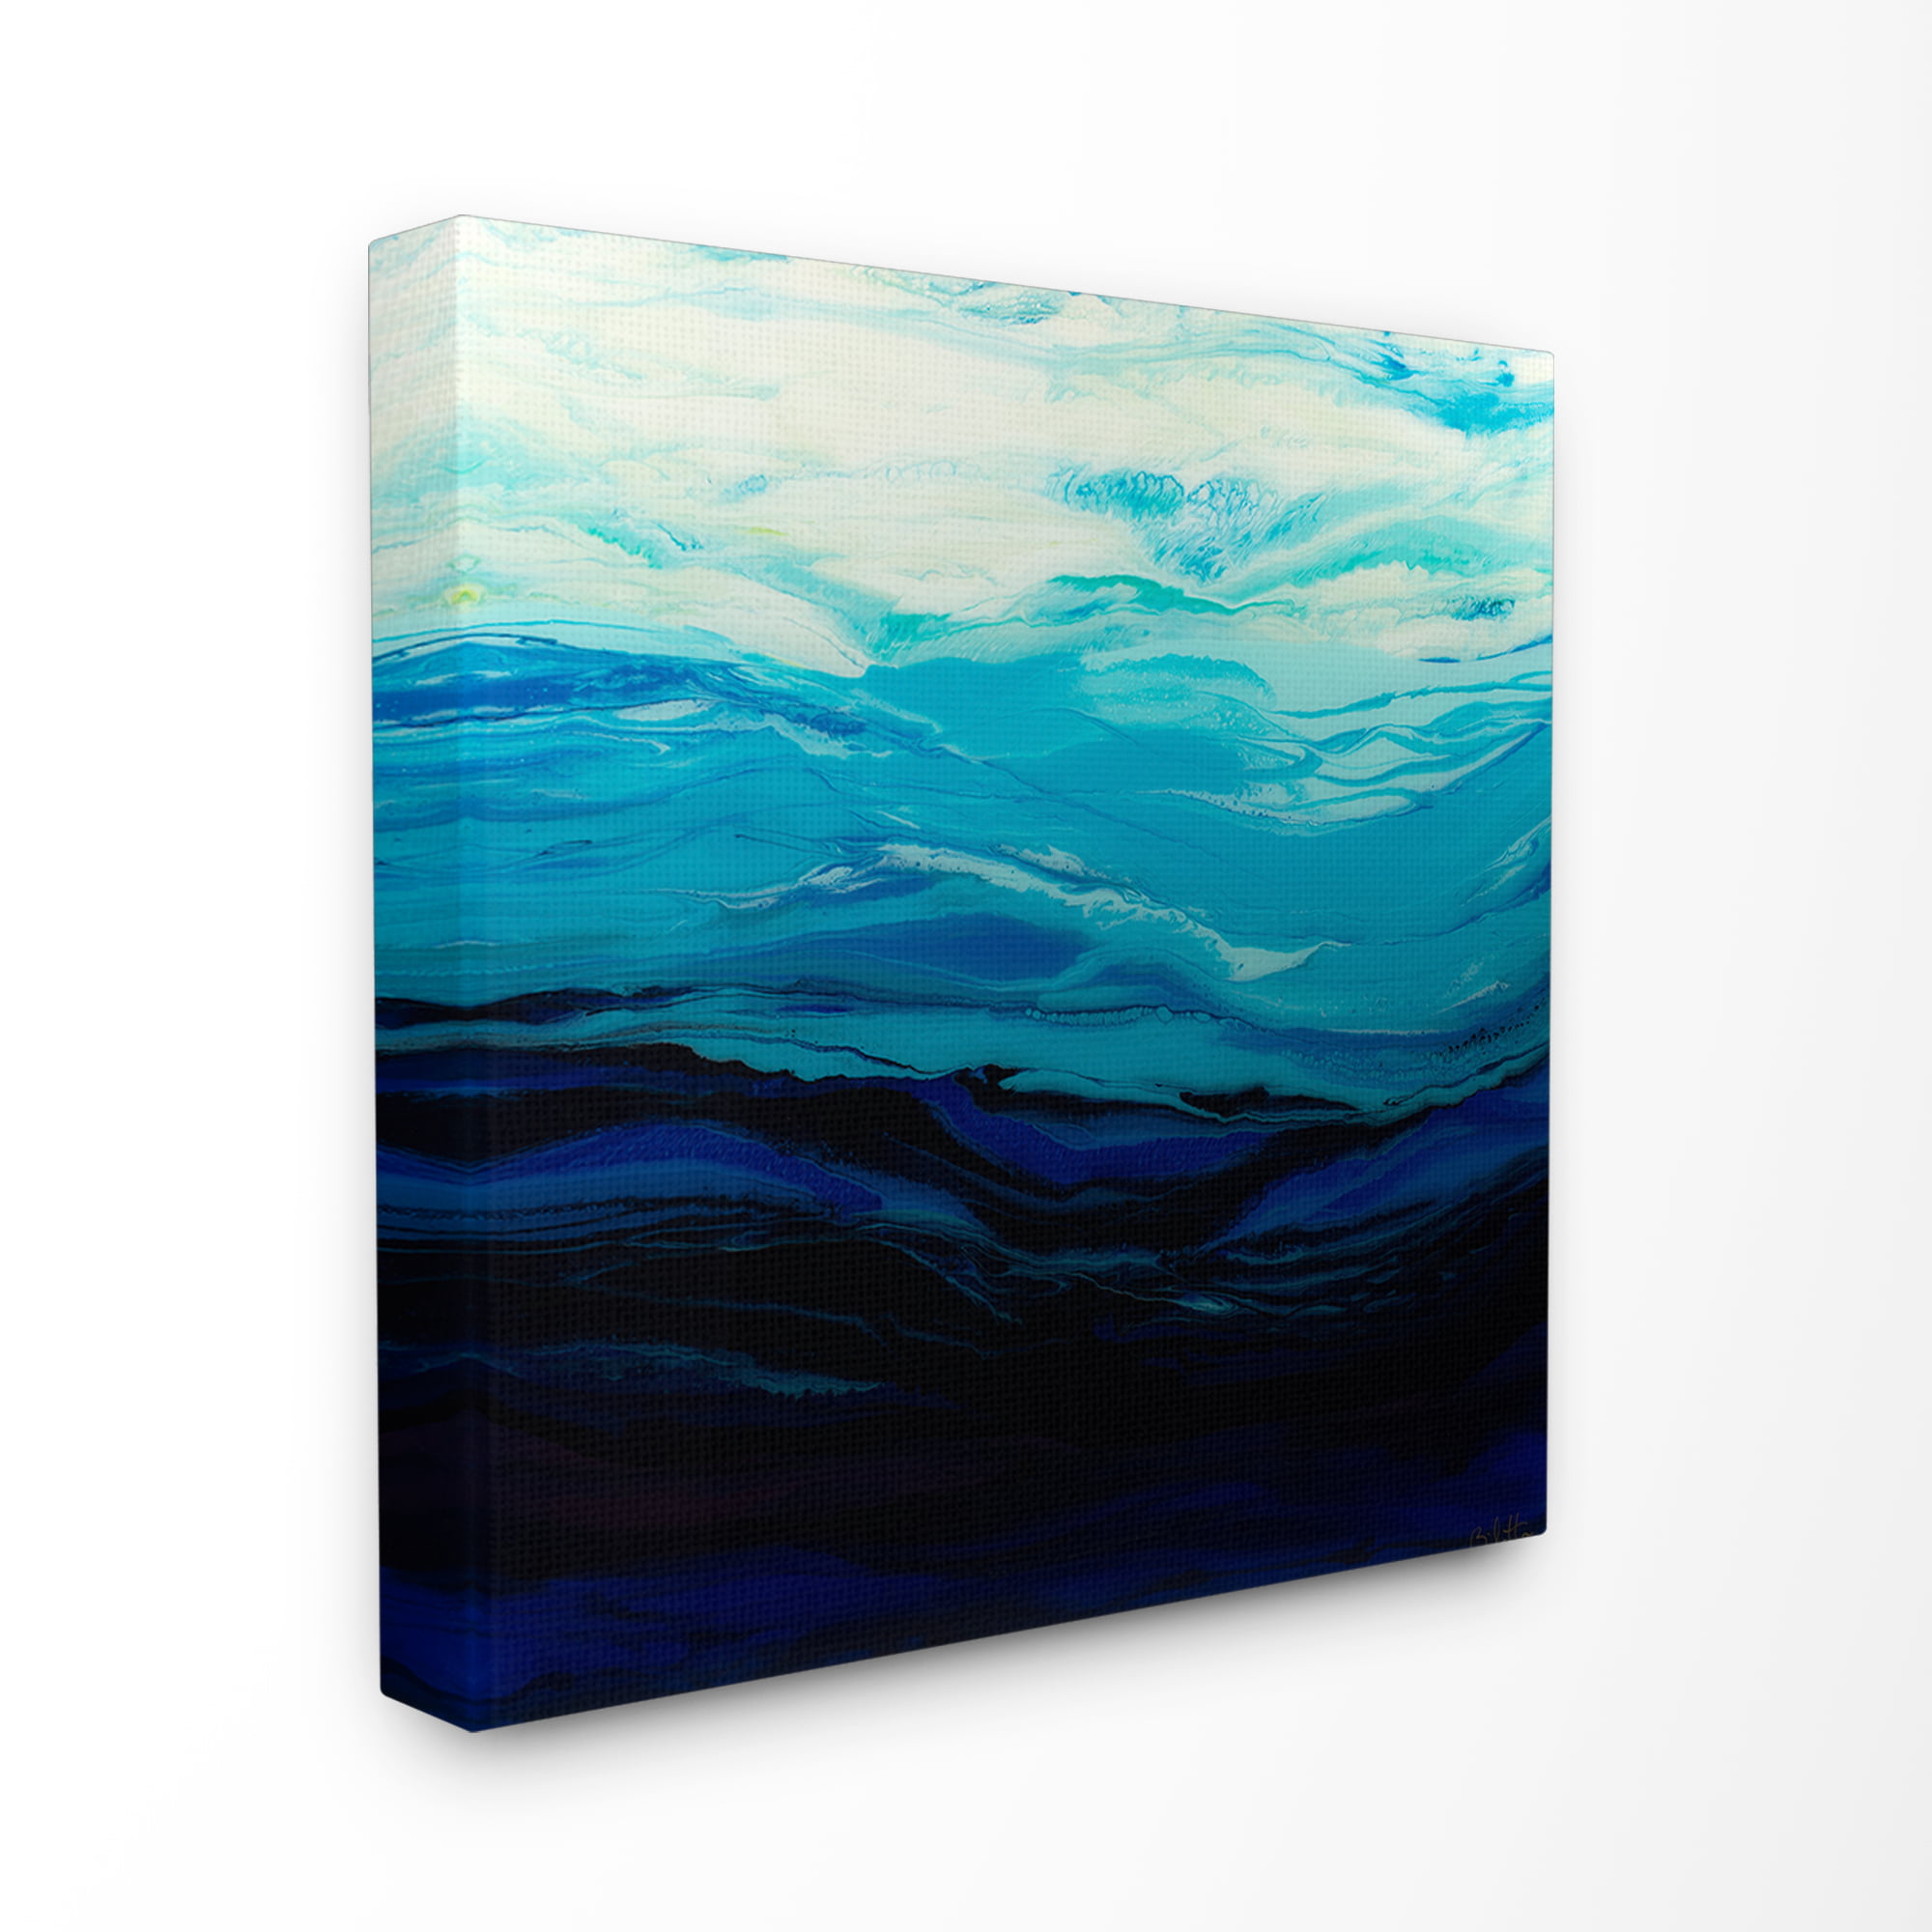 The Stupell Home Decor Collection Acrylic Resin Sea Ocean Waves ...